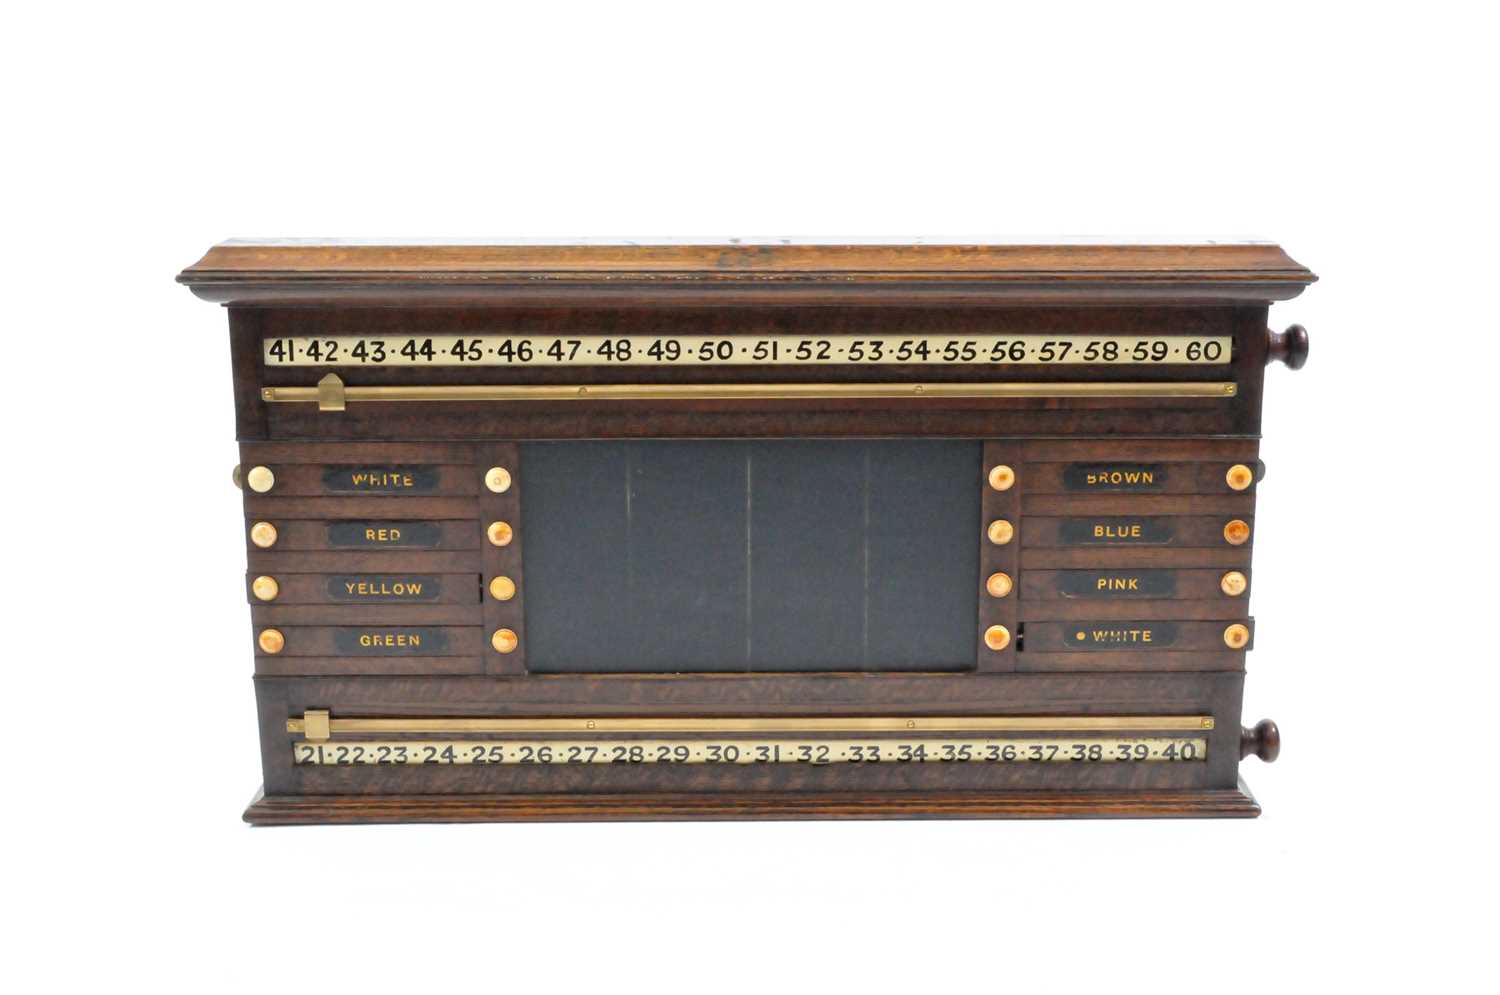 A good quality late 19th / early 20th century oak framed snooker / billiards score board